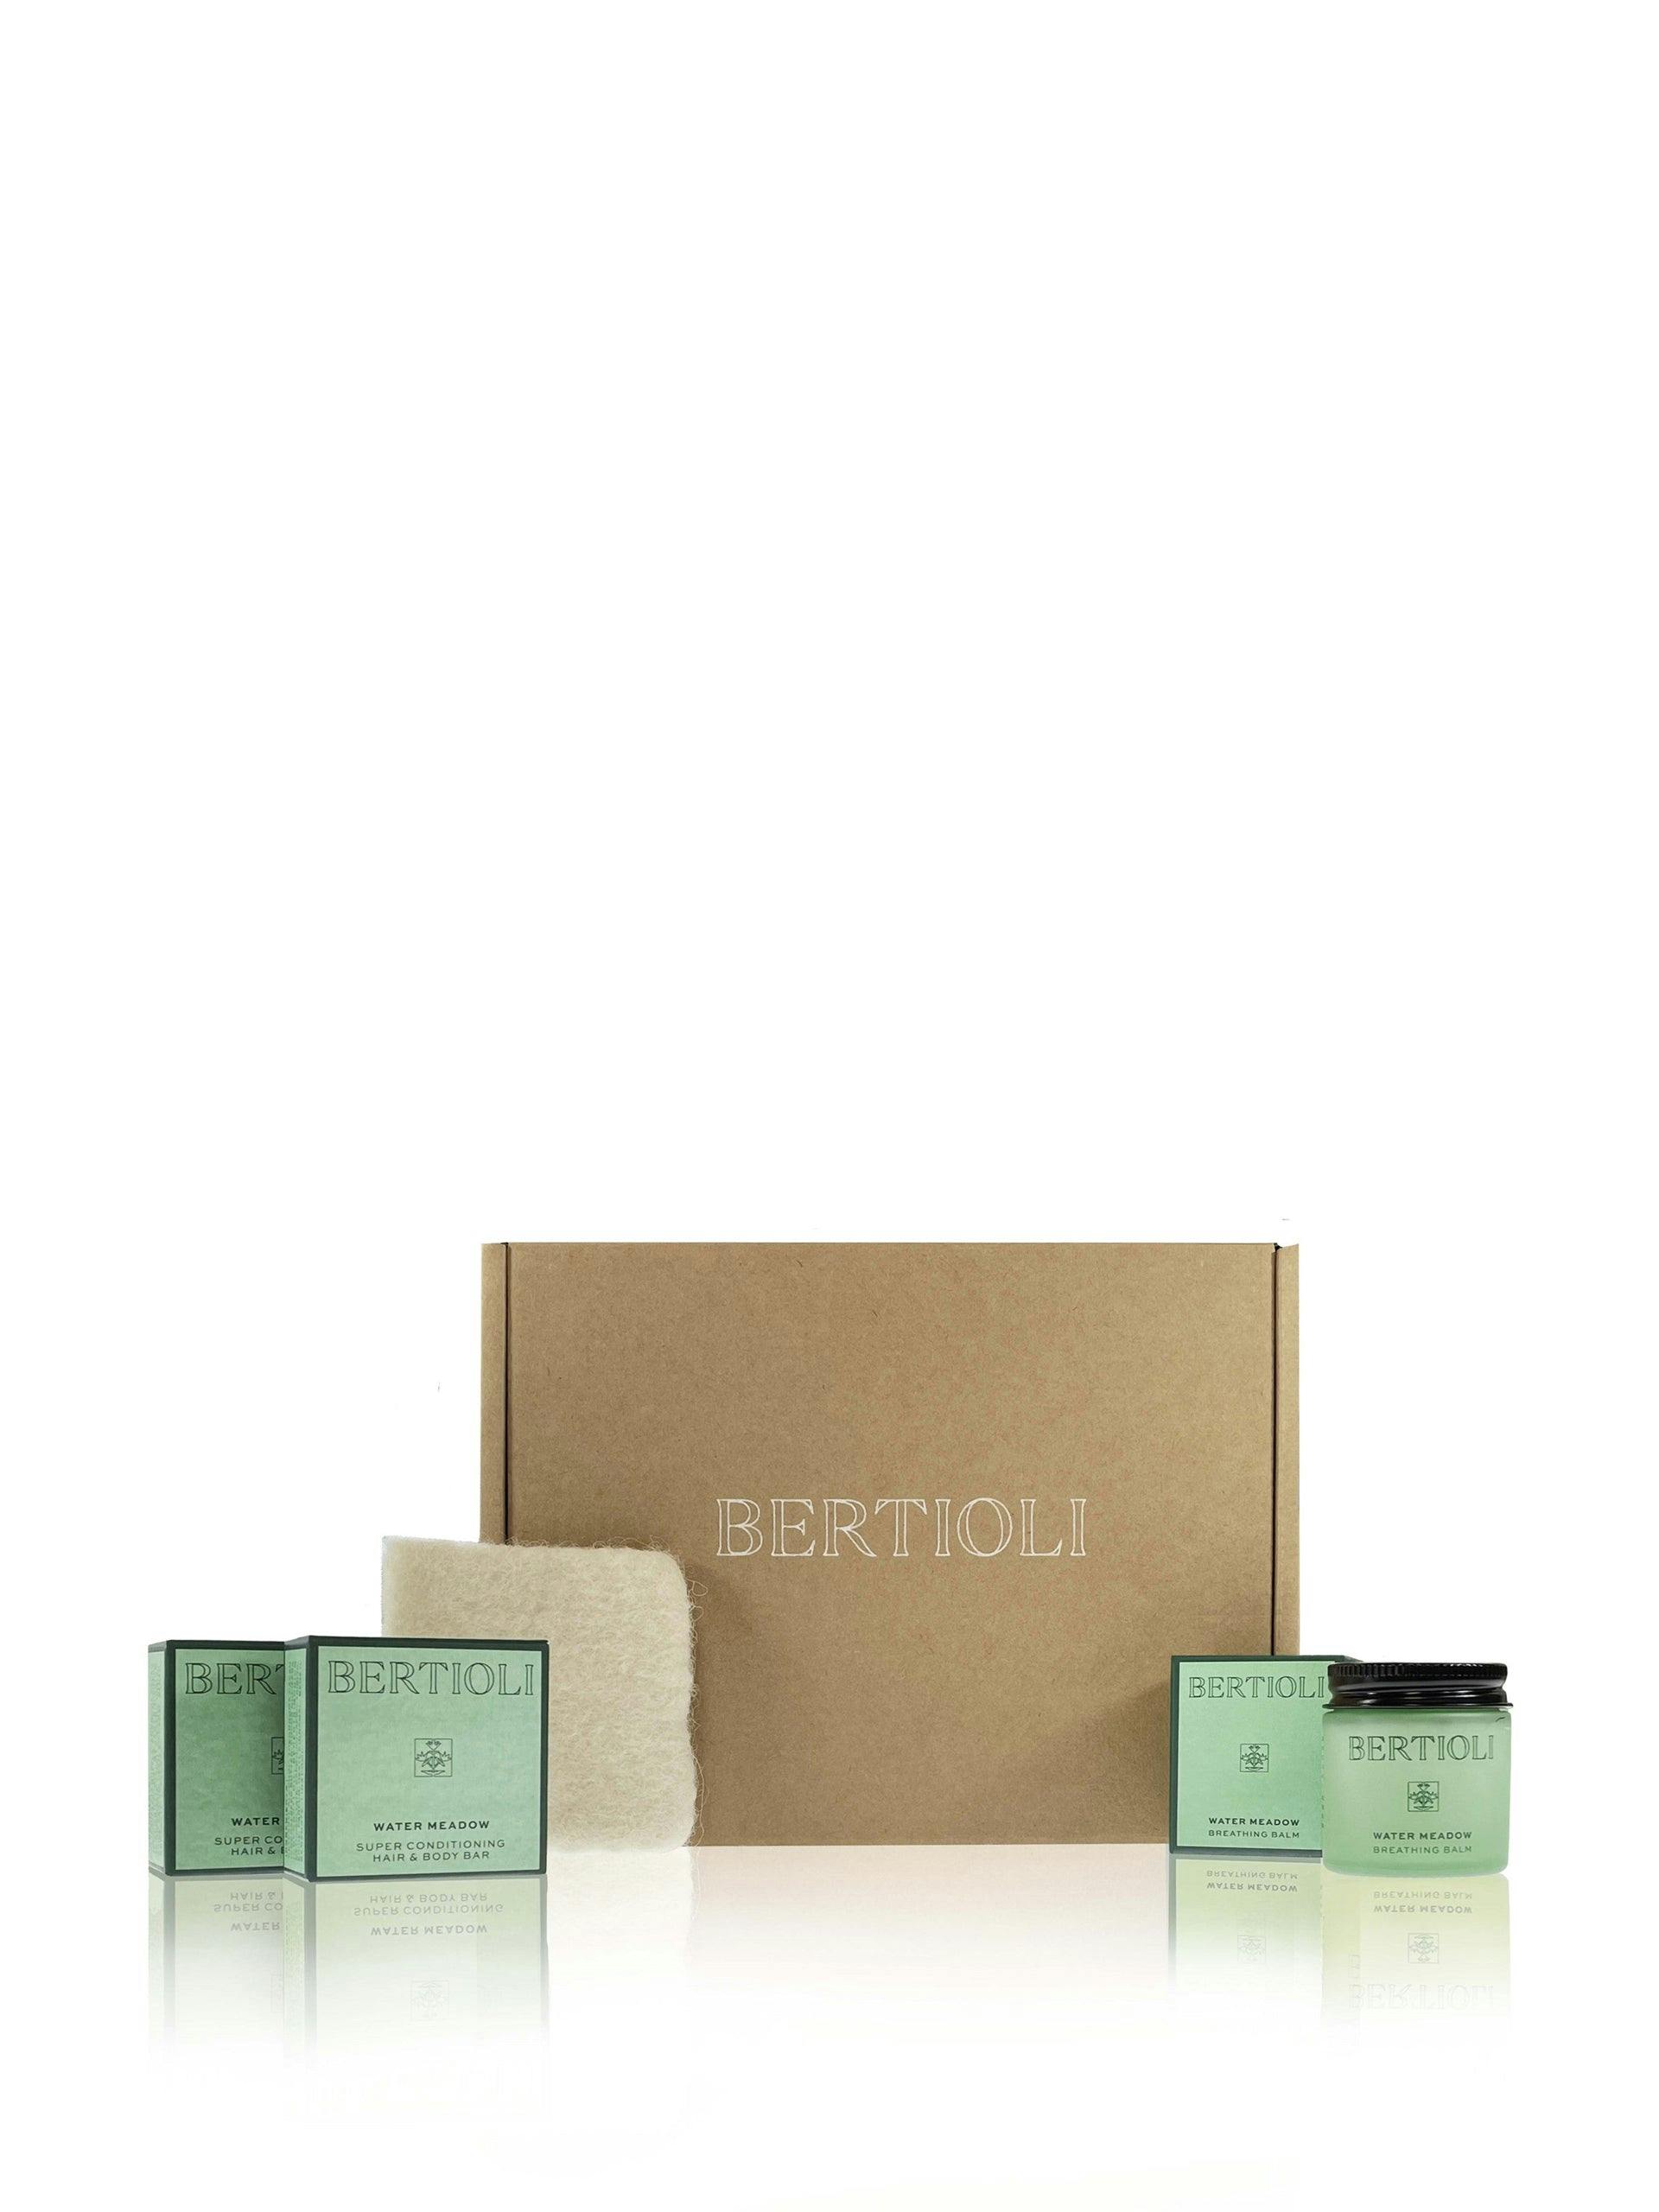 The Bertioli breathing and bathing starter set